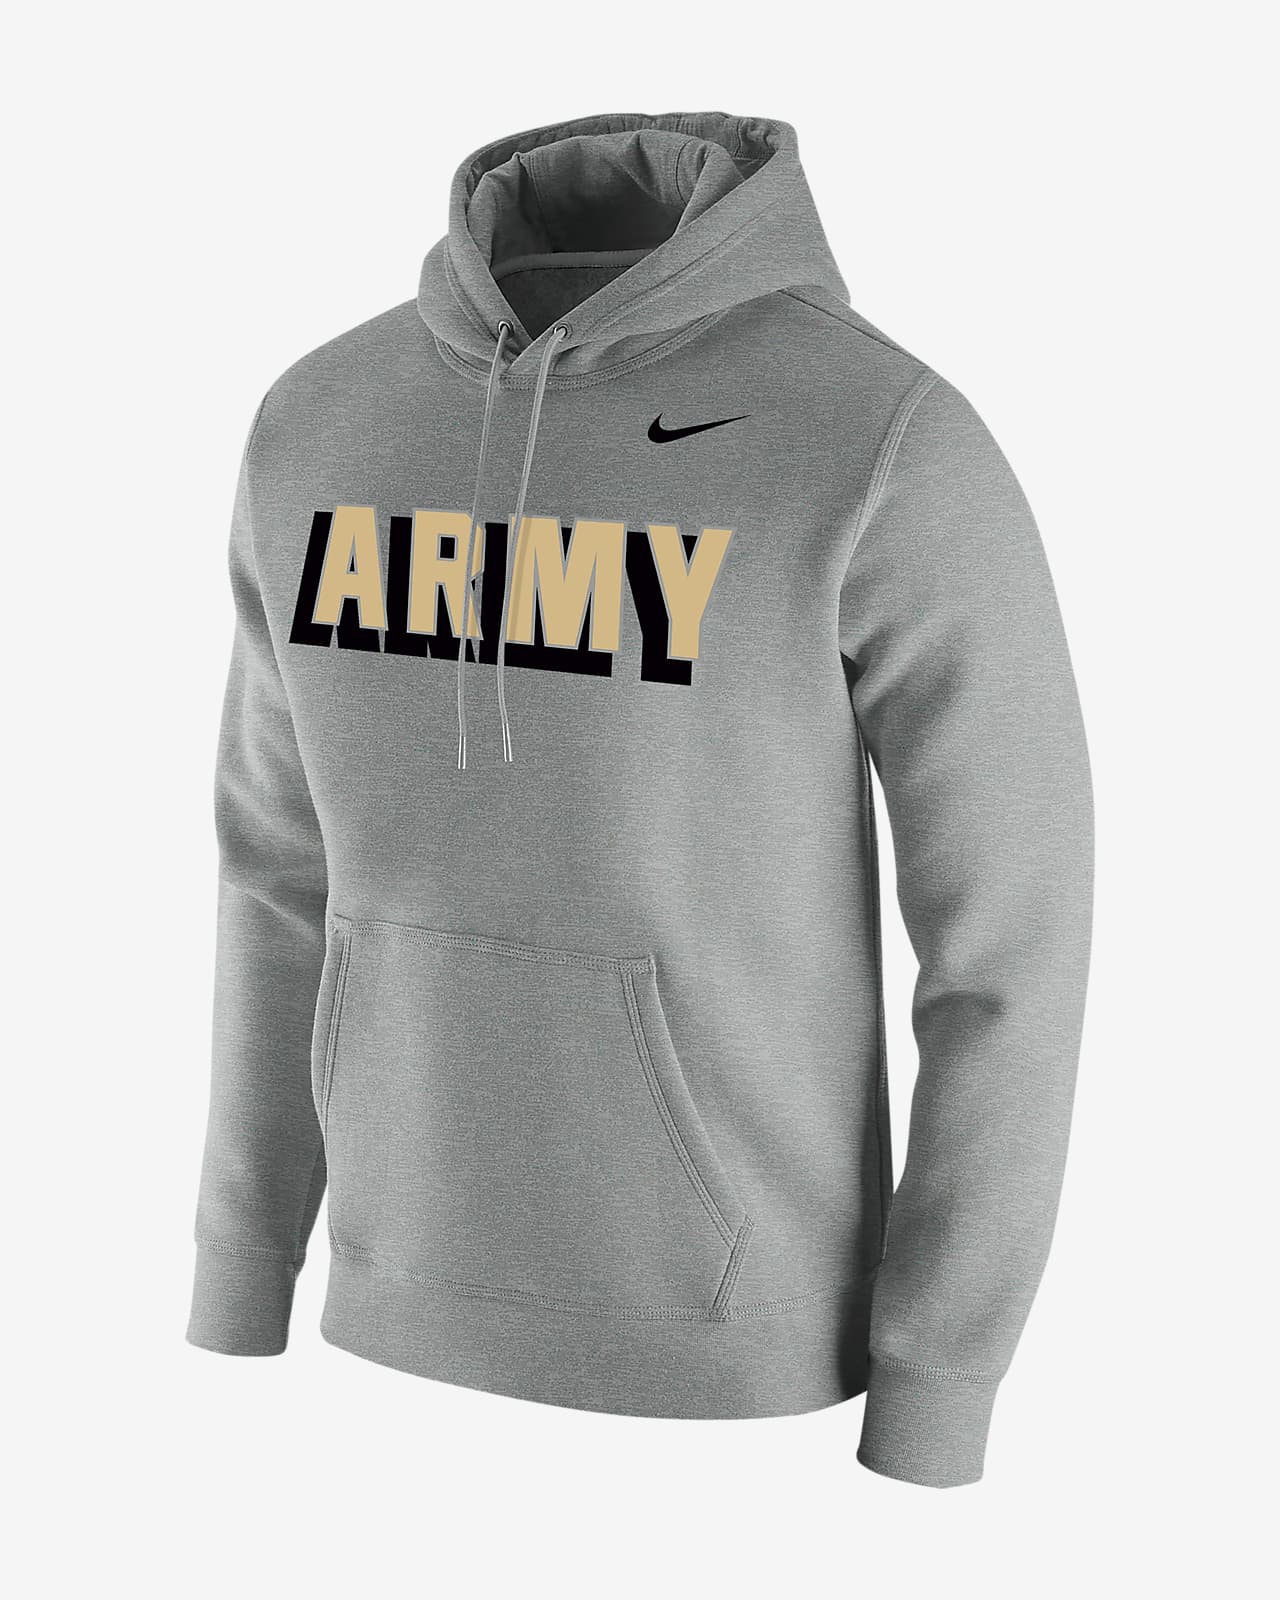 Nike Army Hoodie - Army Military